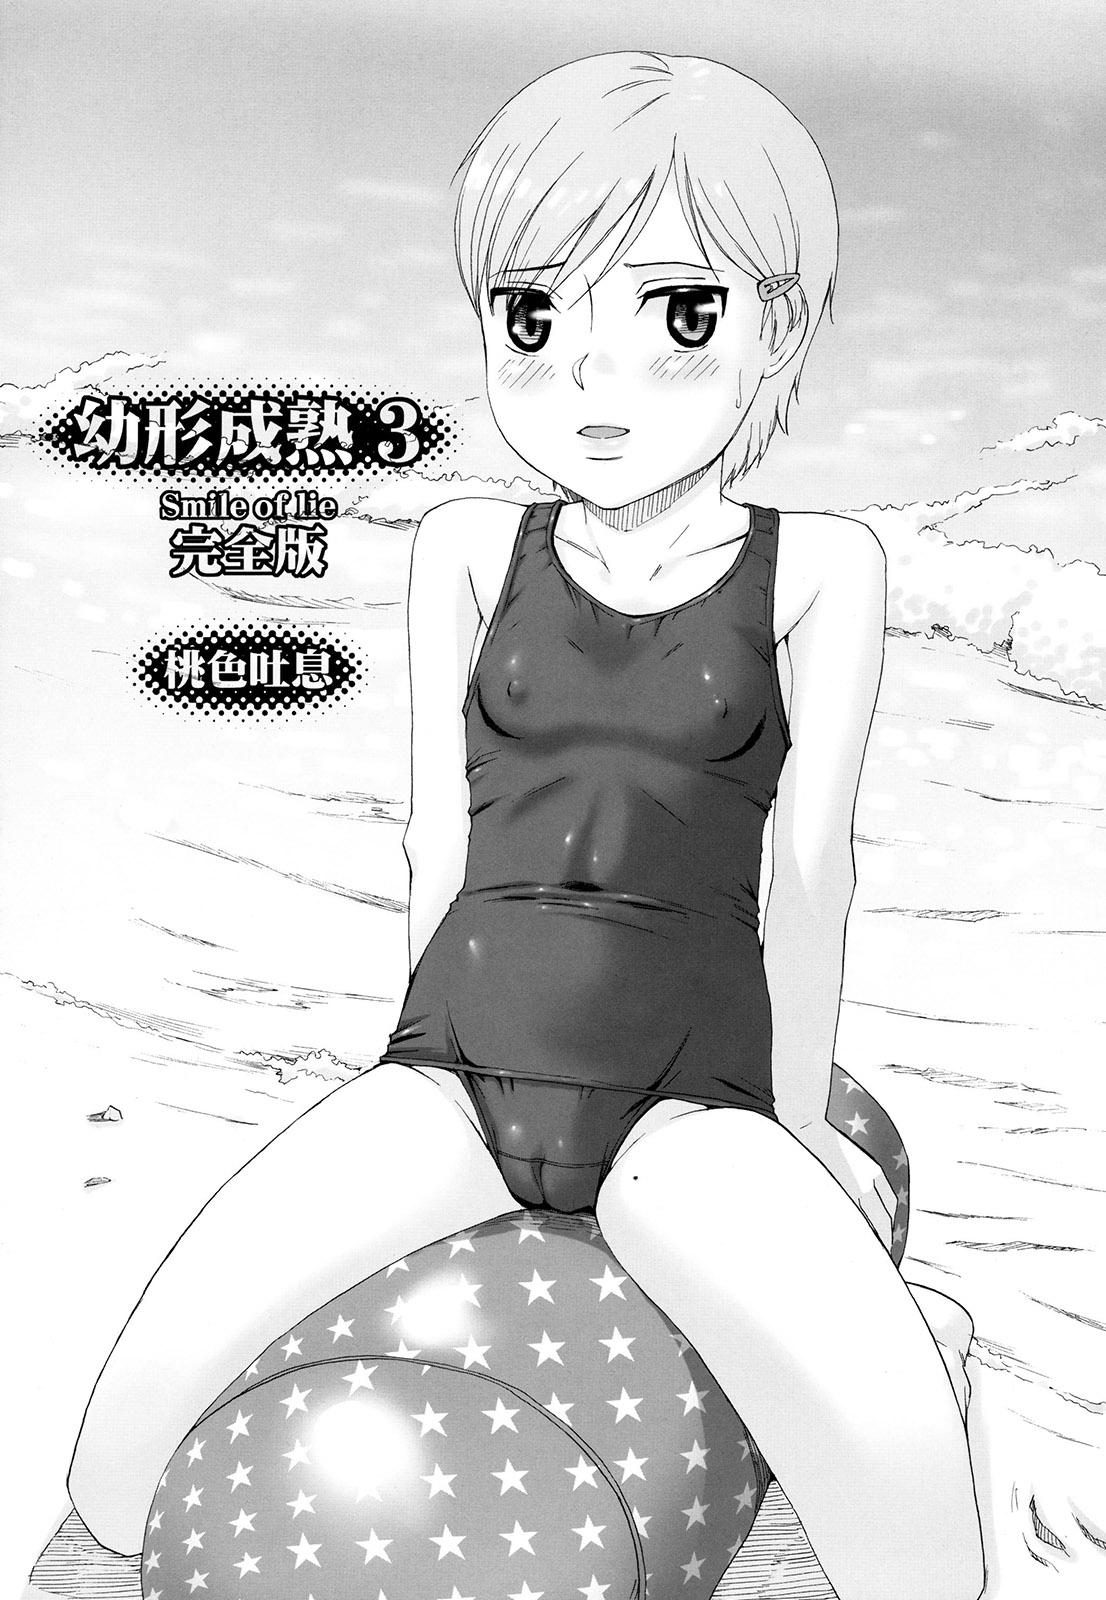 Foreplay Youkei Seijuku 3 Kanzenban - Smile of lie Wanking - Page 4